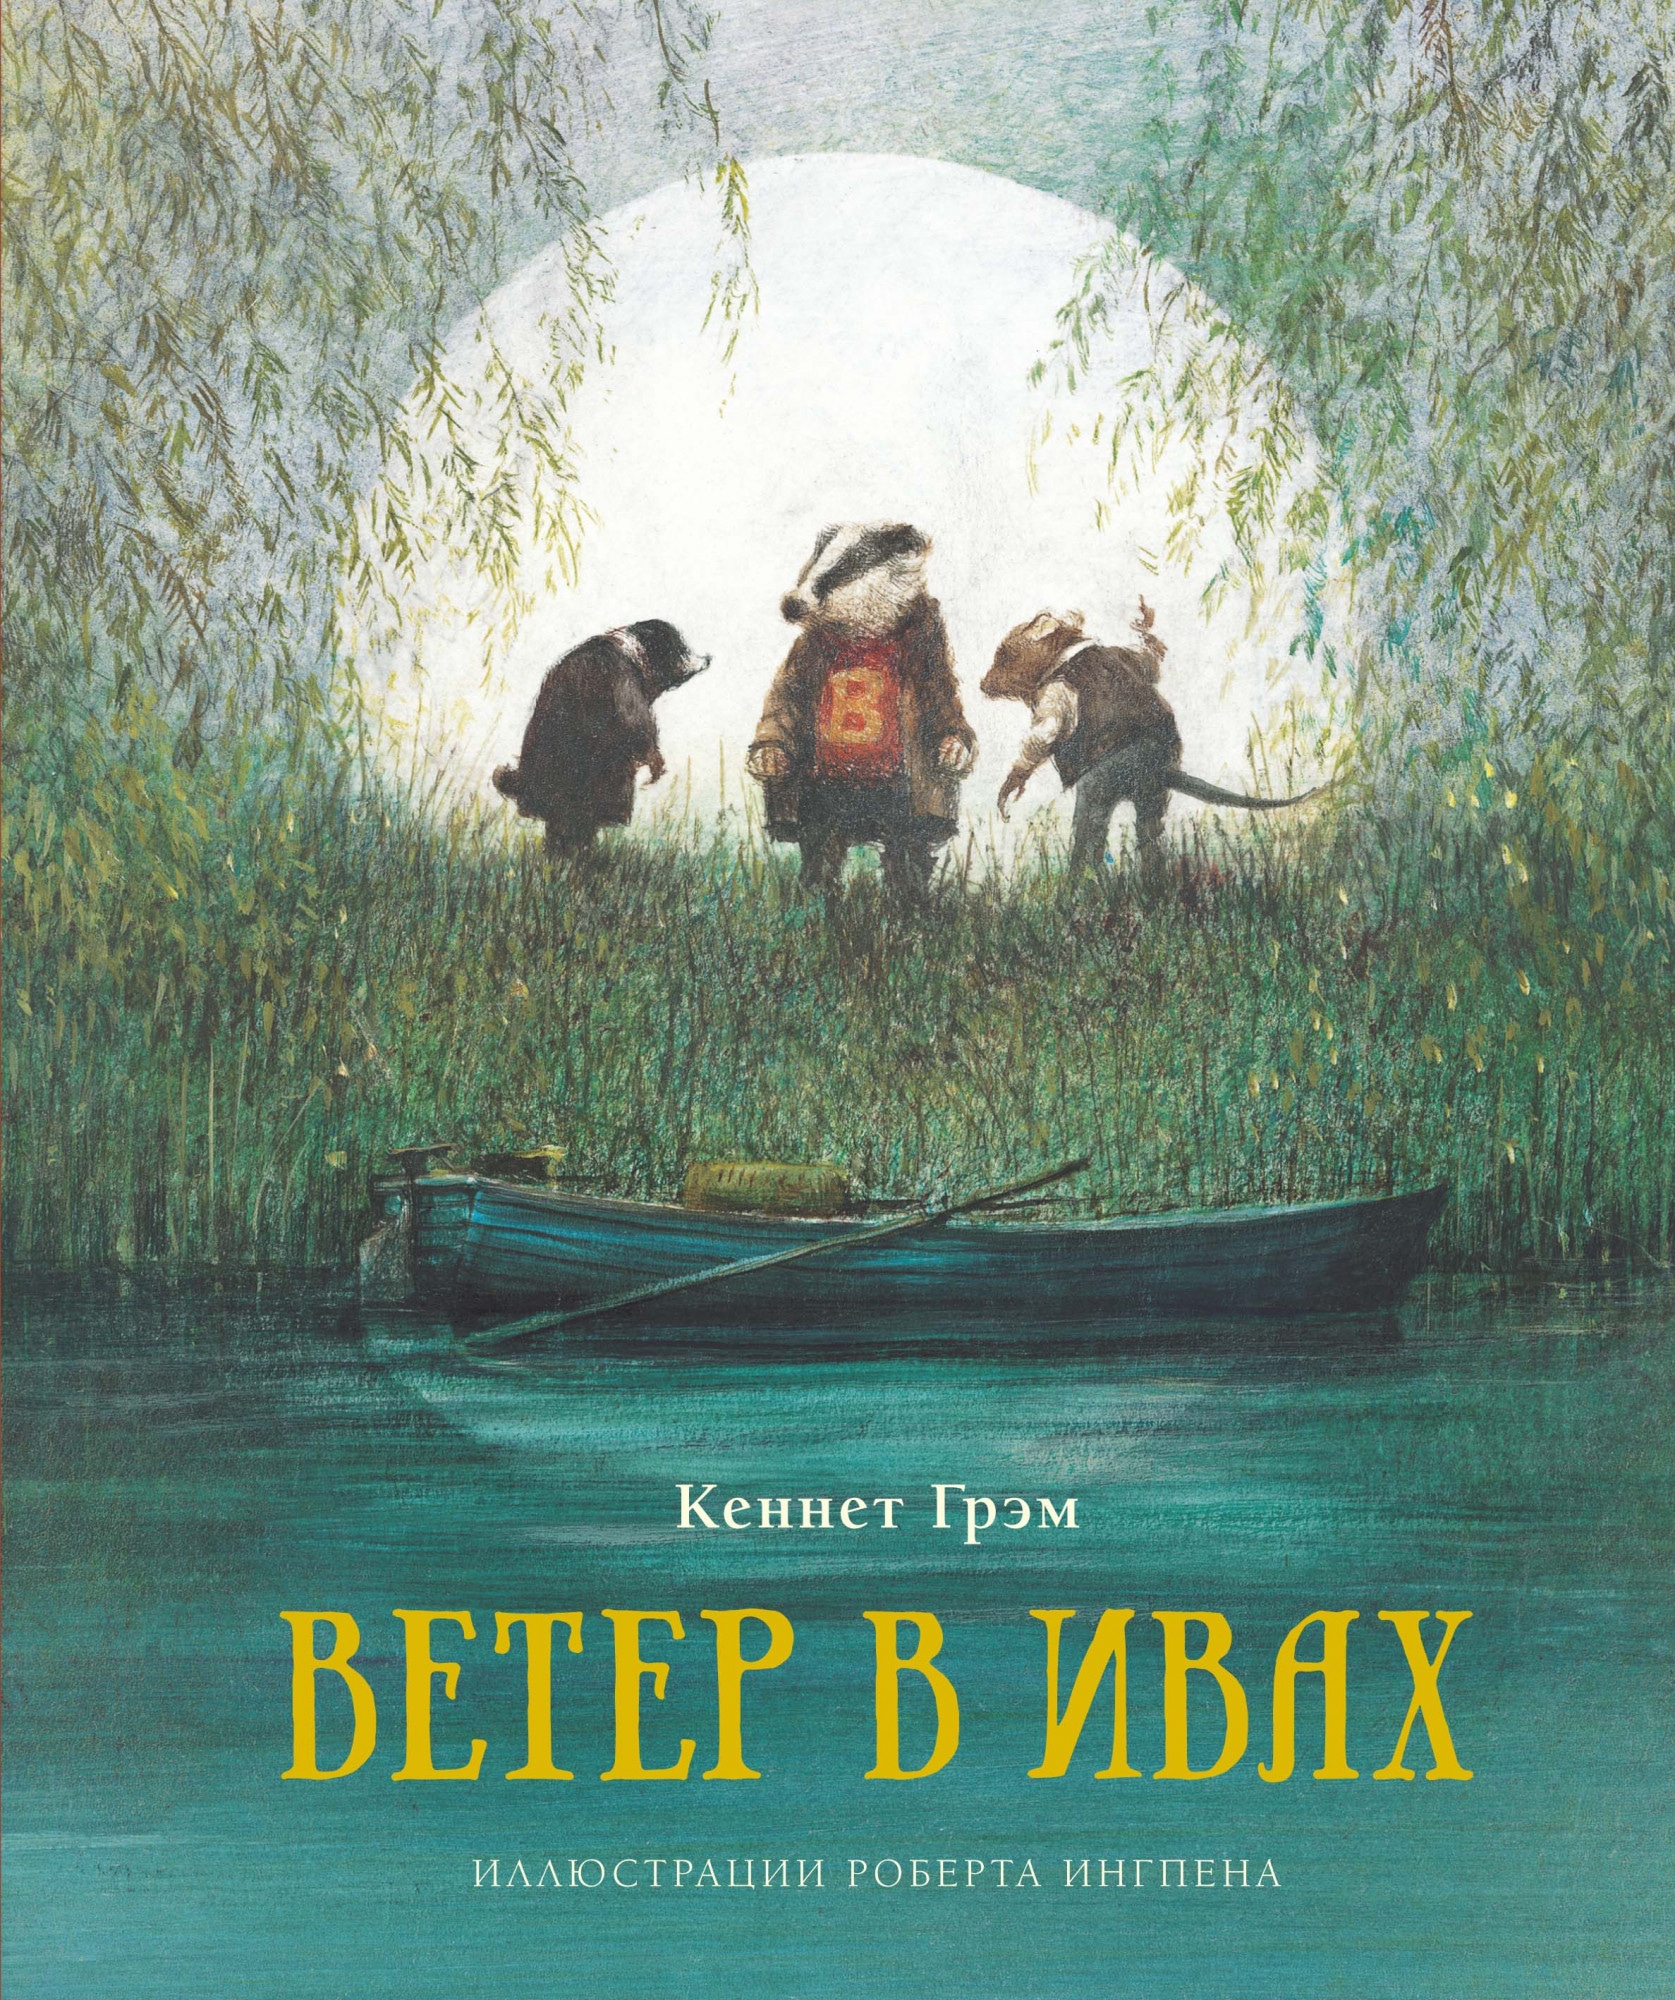 Book “Ветер в ивах” by Кеннет Грэм — 2021